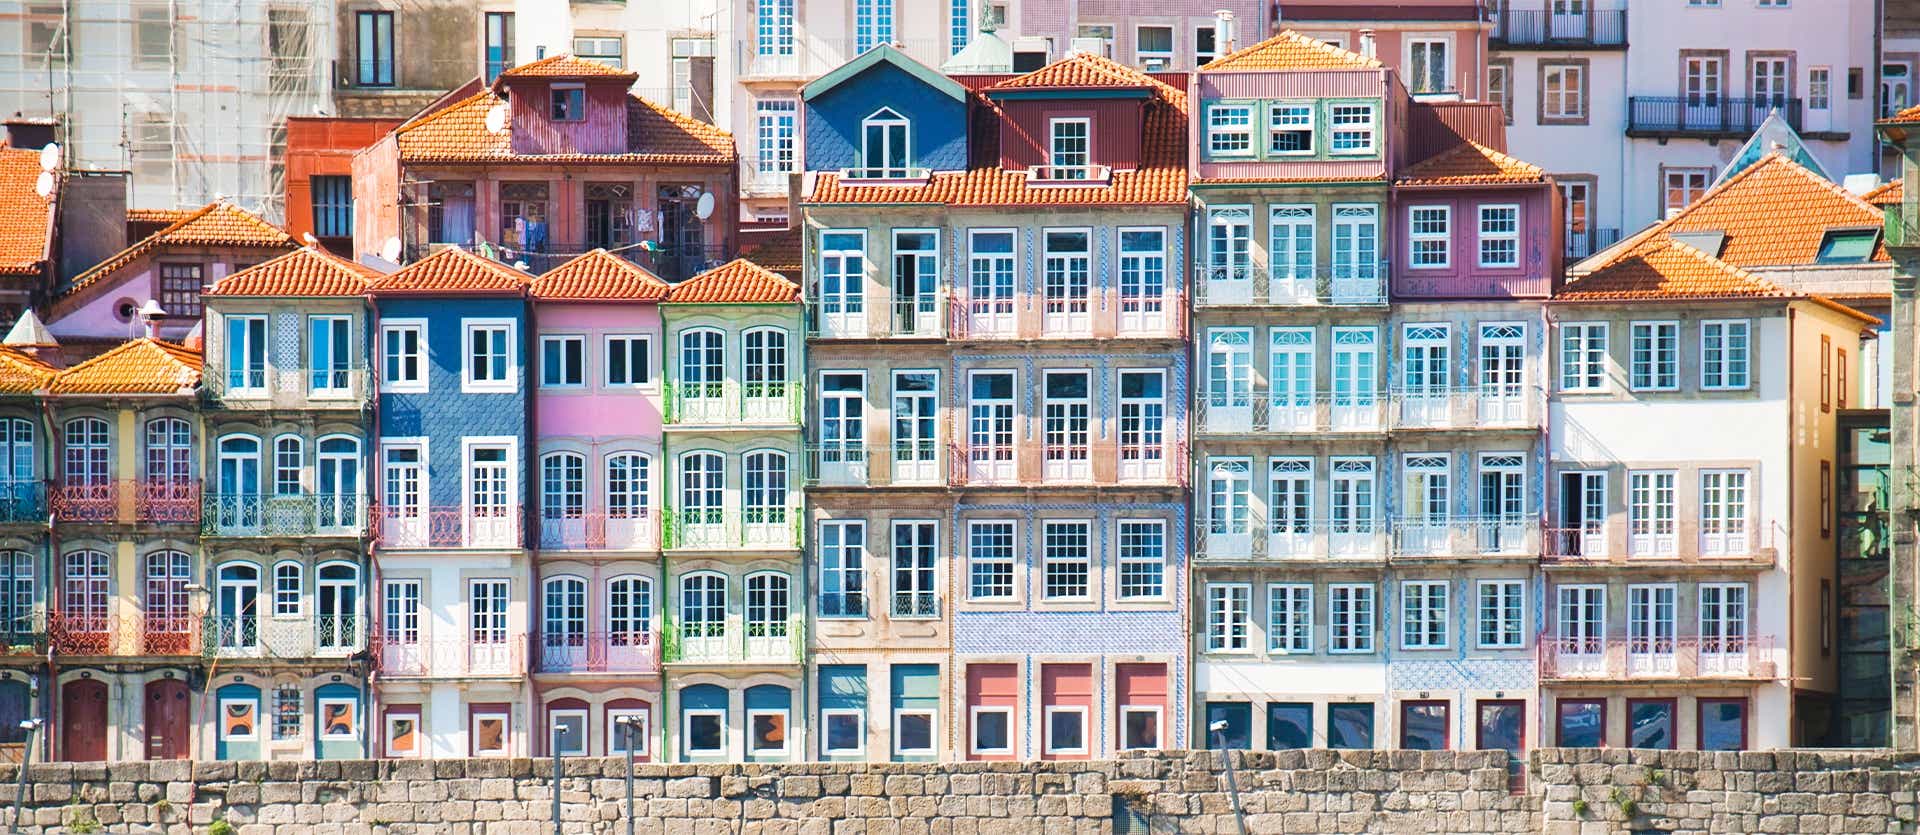 Porto <span class="iconos separador"></span> Portugal